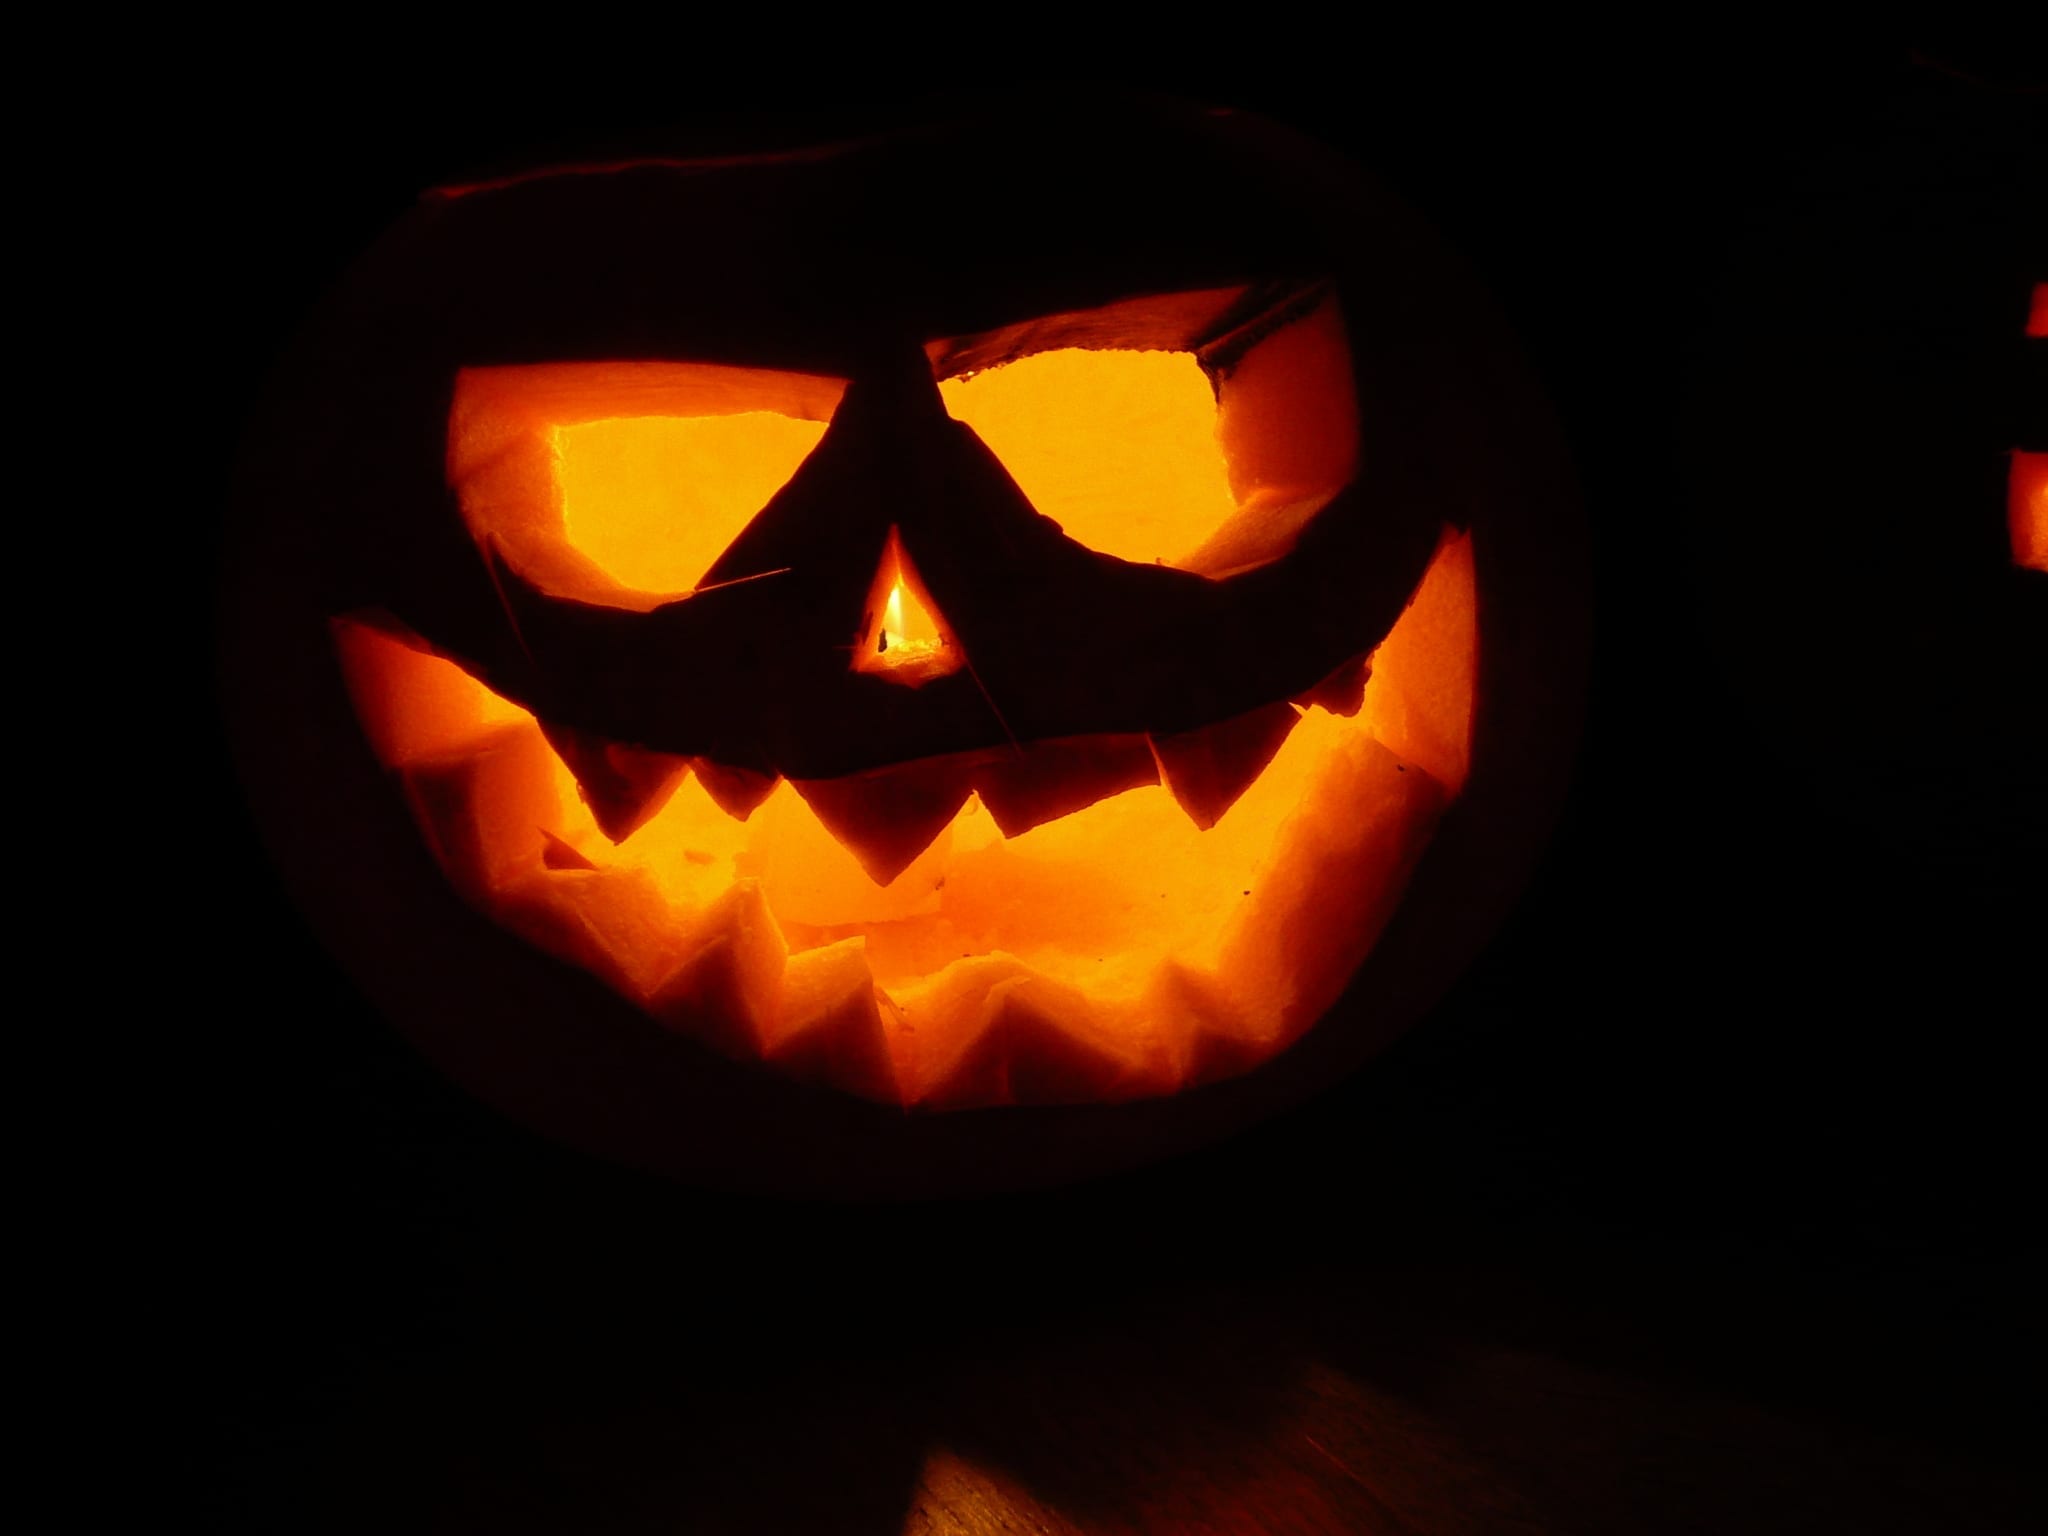 A pumpkin lantern glowing in the dark